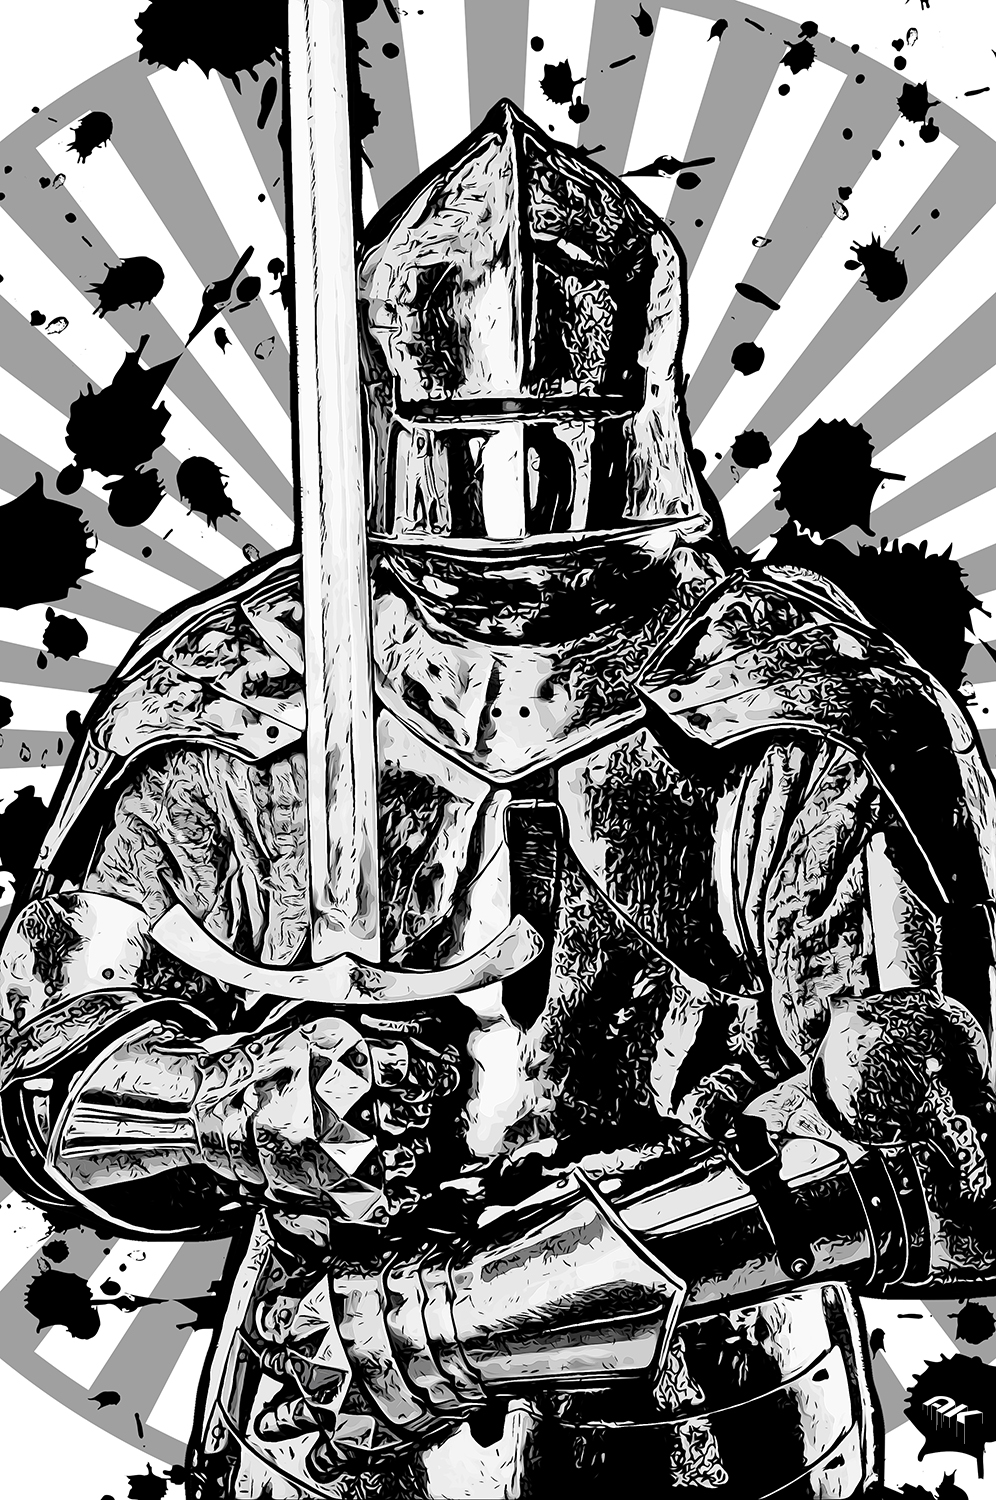 Image of knight